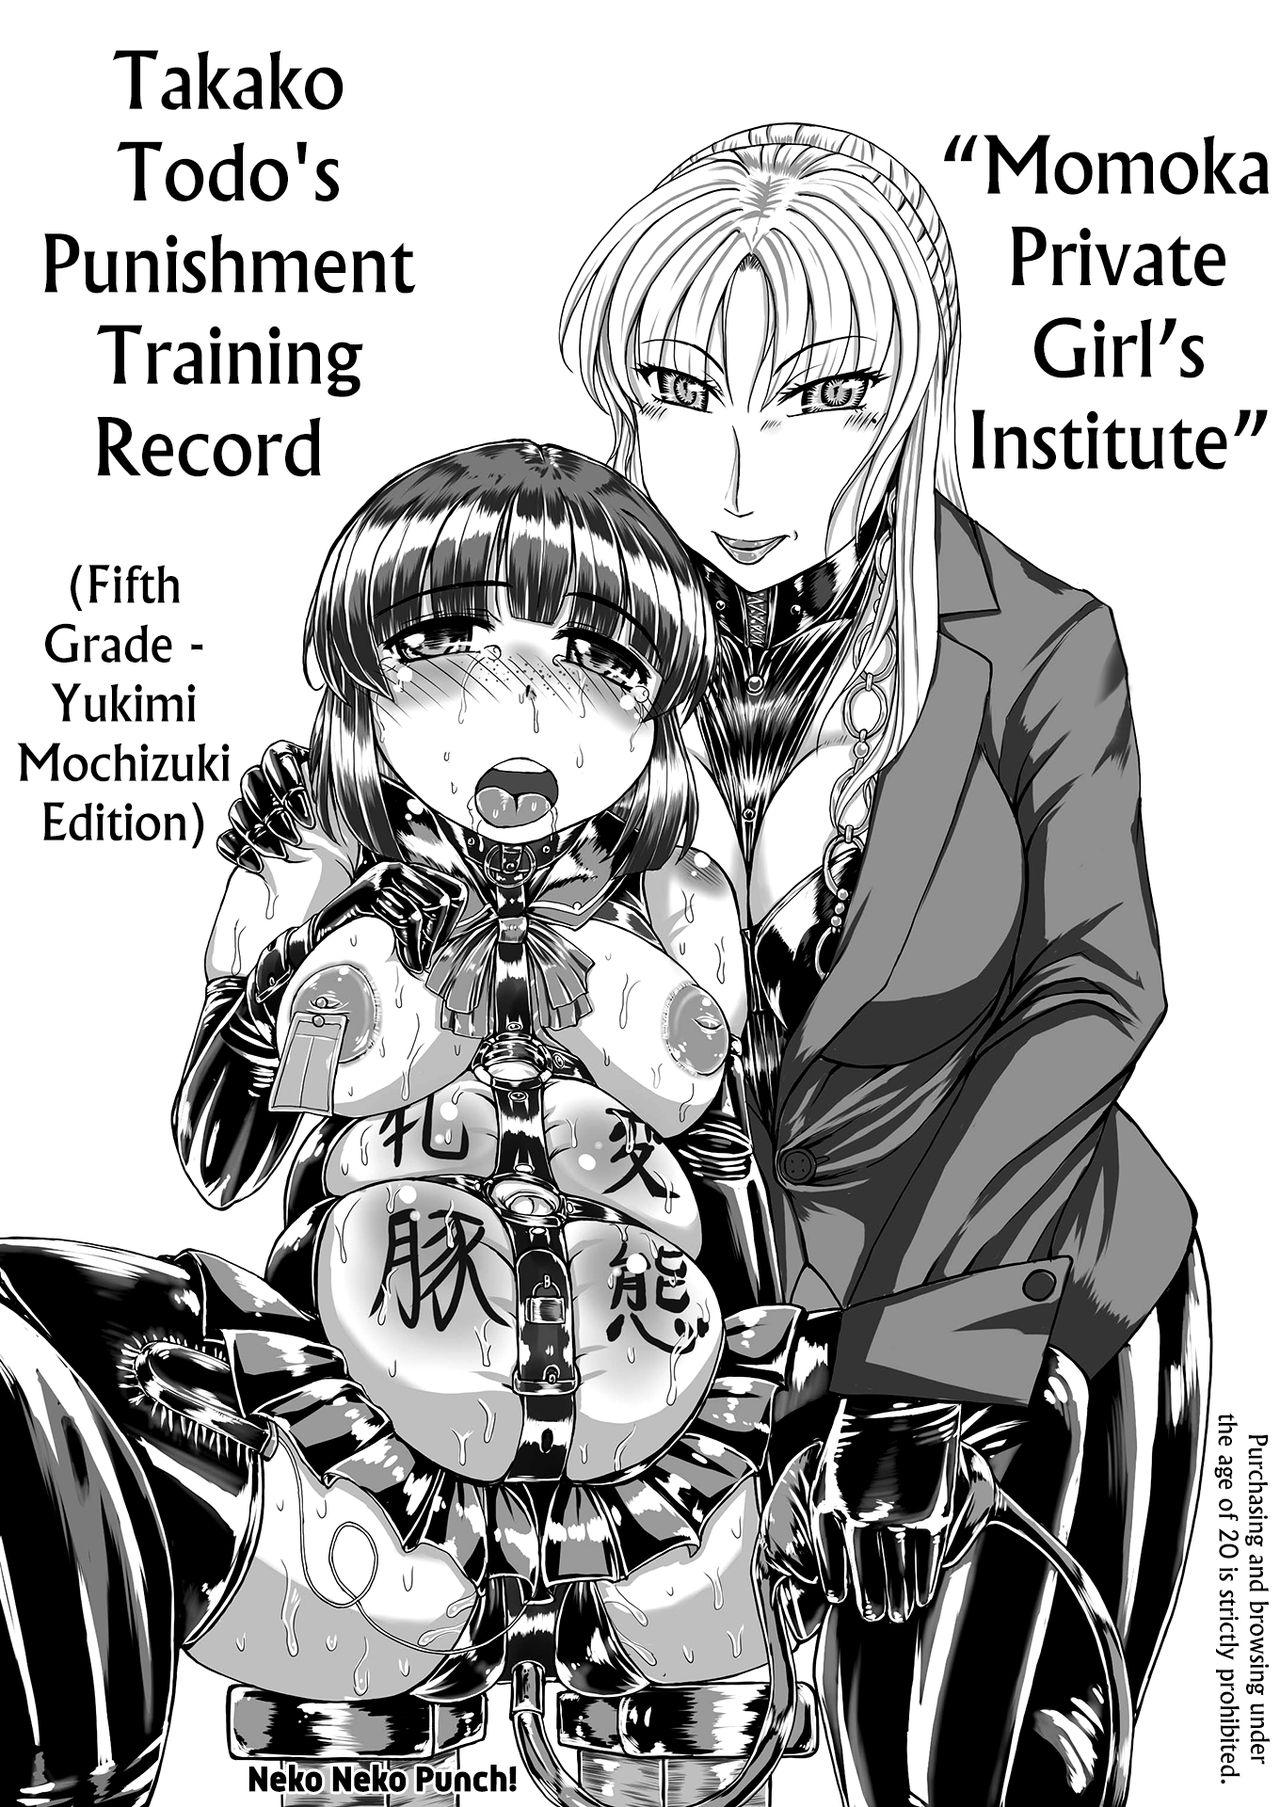 Russian [Neko Neko Panchu!] [Momoka Private Girls Institute] [Takako Todo's Punishment Training Record] (Fifth Grade - Yukimi Mochizuki Edition) [English] Whore - Page 1